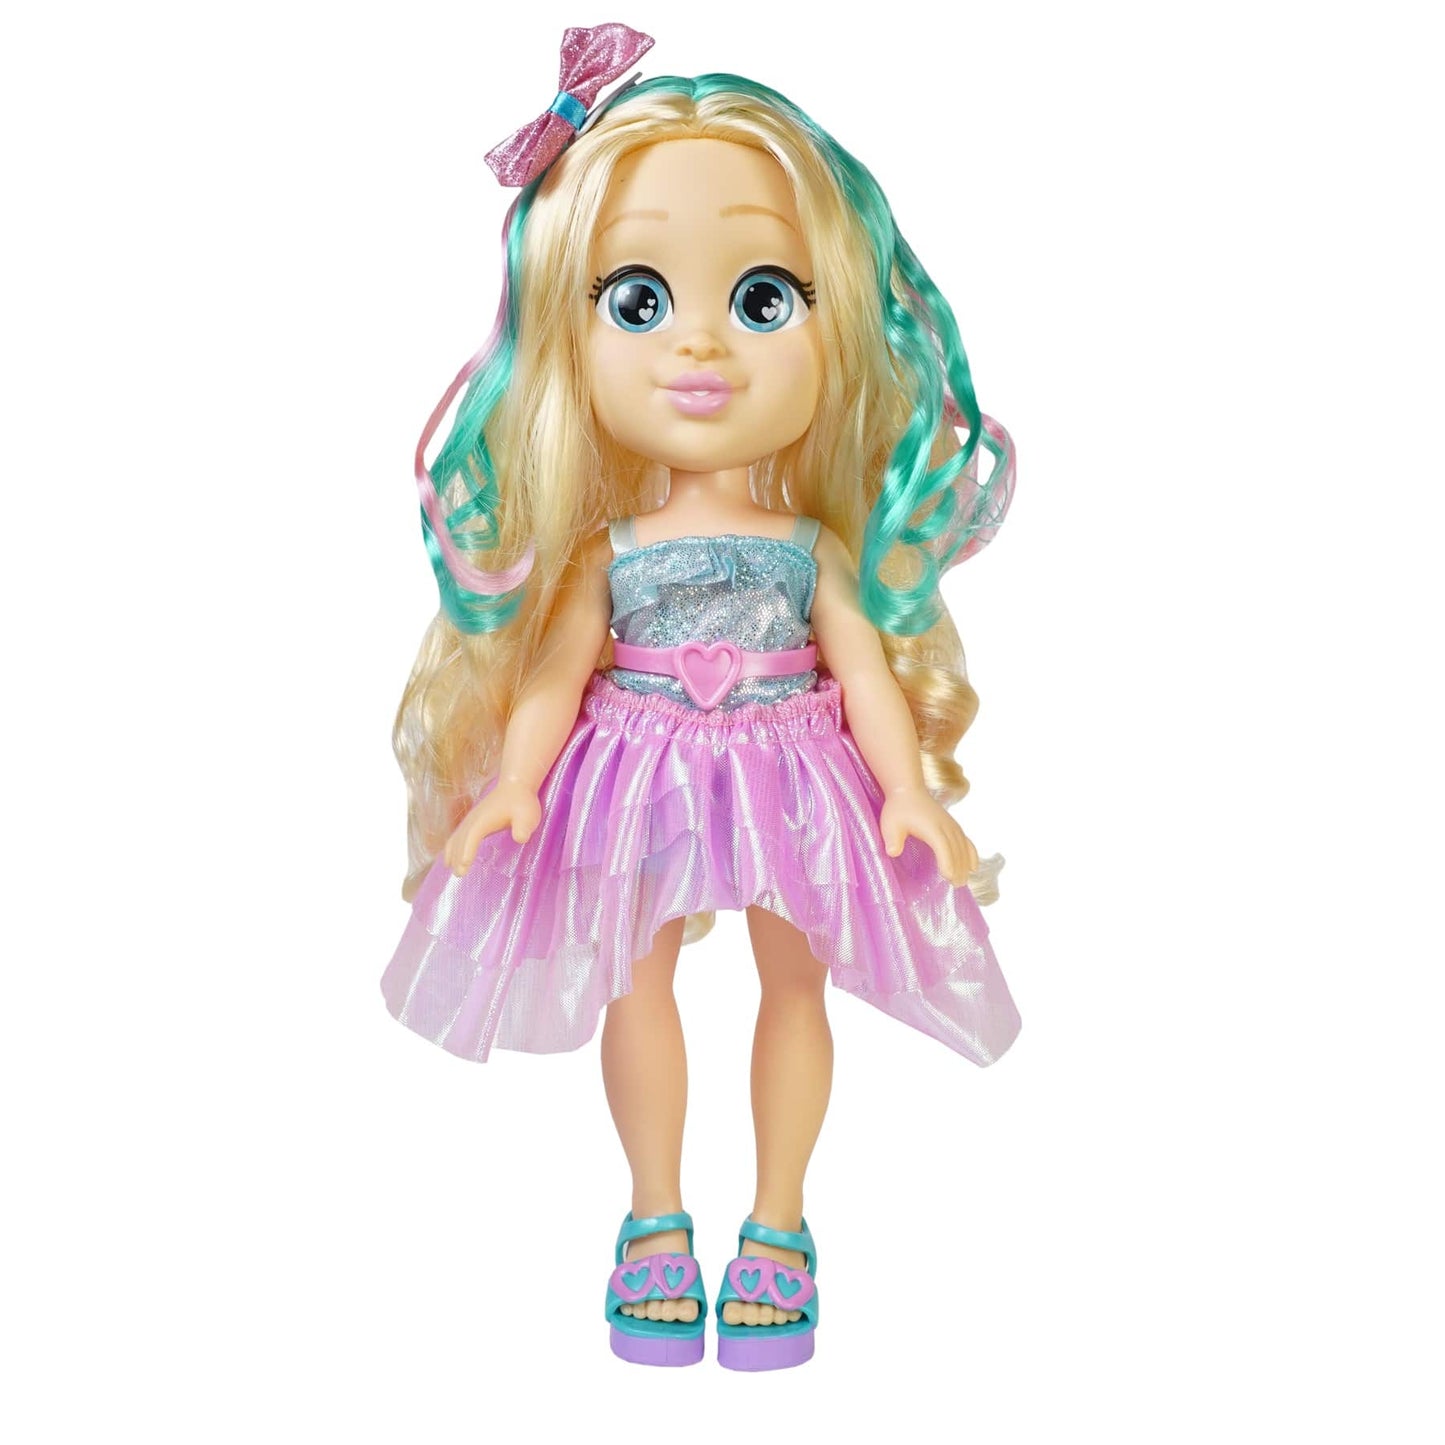 love diana Toys Love Diana Mashup Mermaid & Party Doll (33 cm)